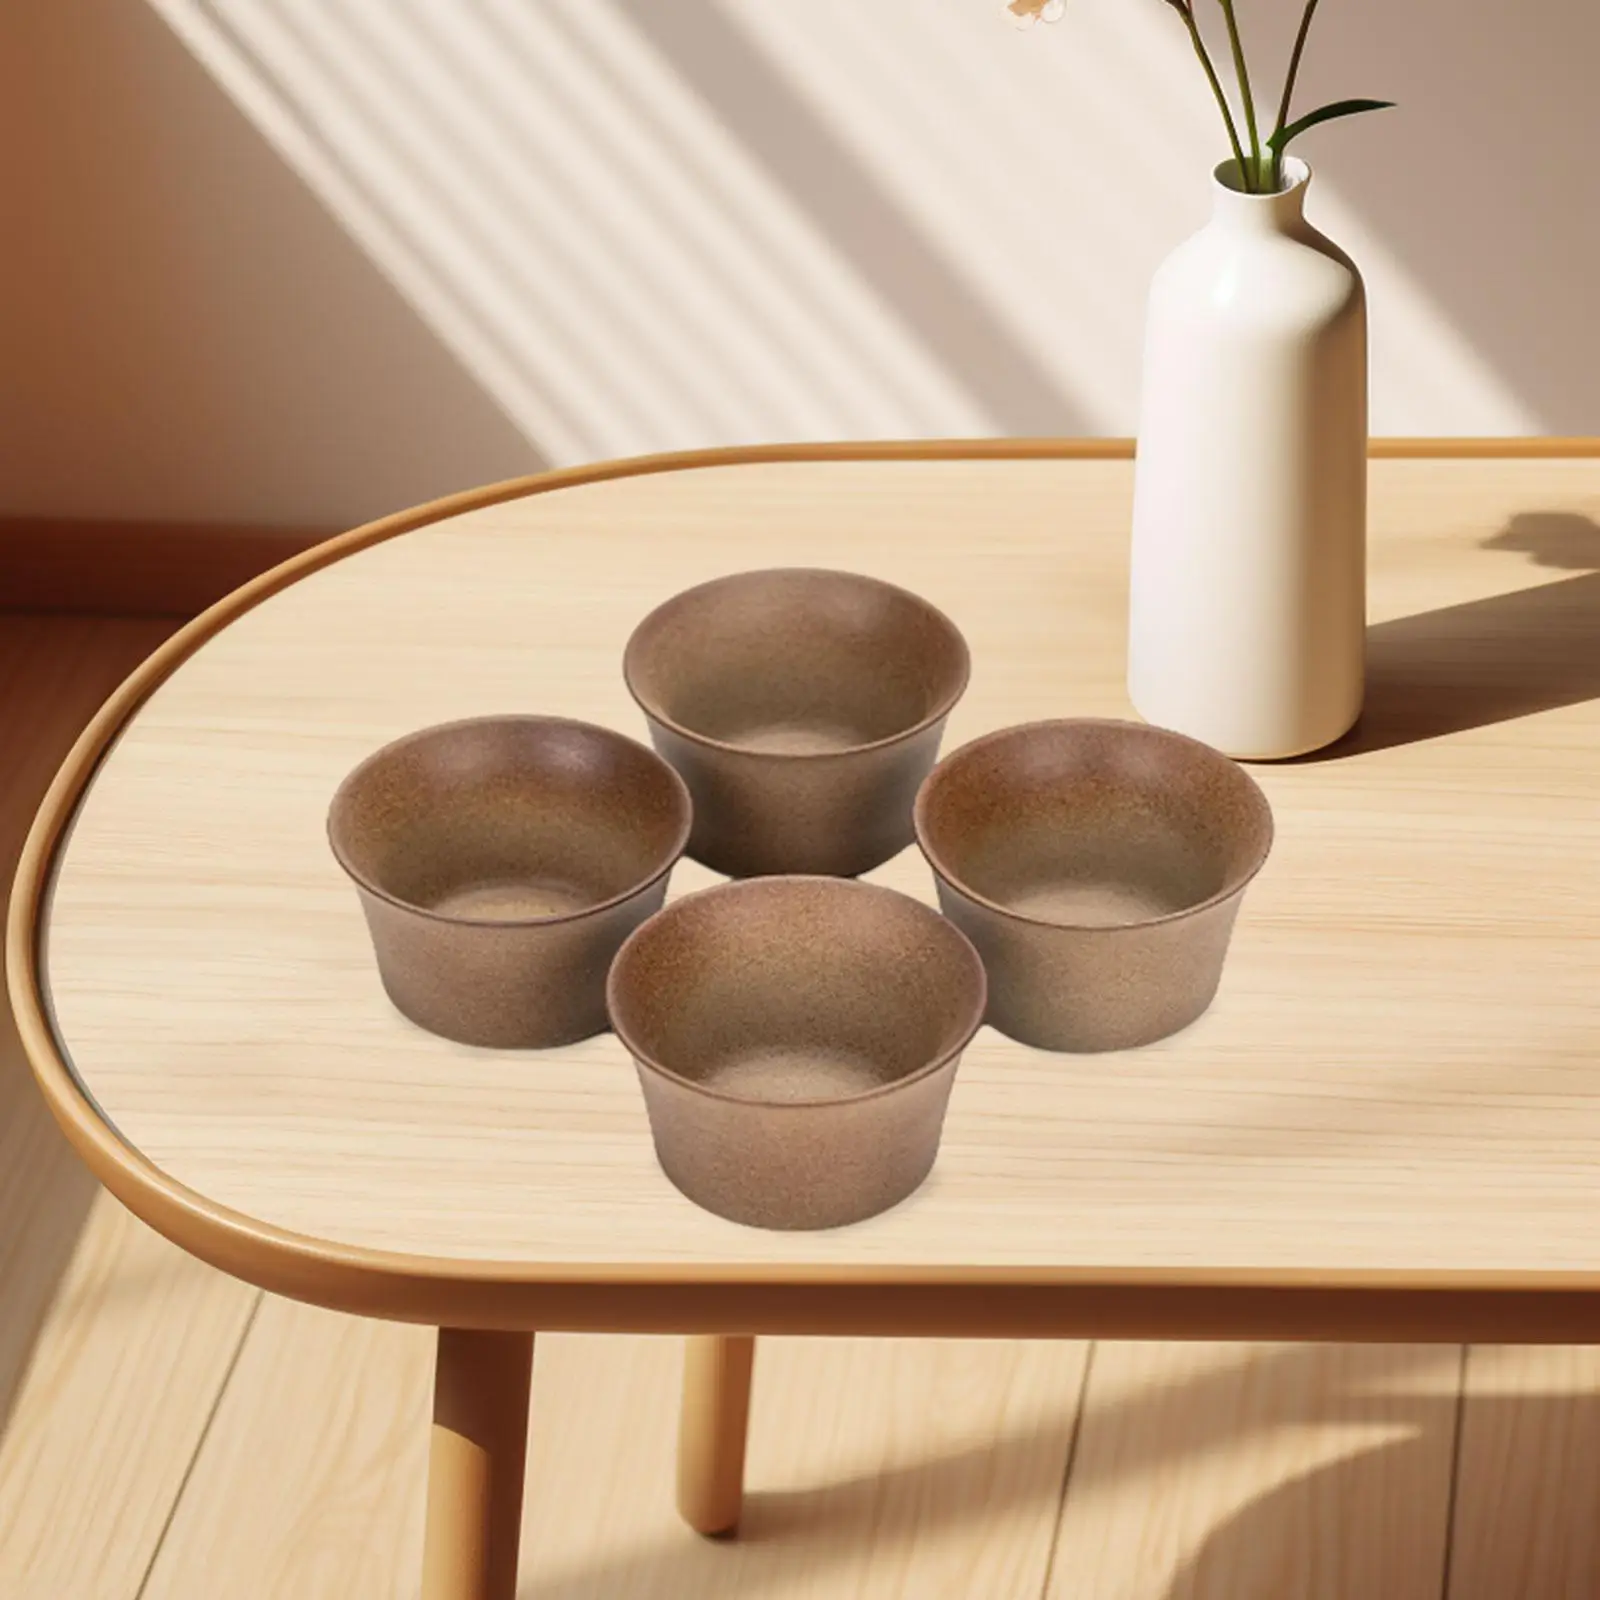 4x Japanese Tea Cups Set Traditional Coffee Mug Drinkware without Handles for Green Tea Restaurant Matcha Tea Home Cappuccino